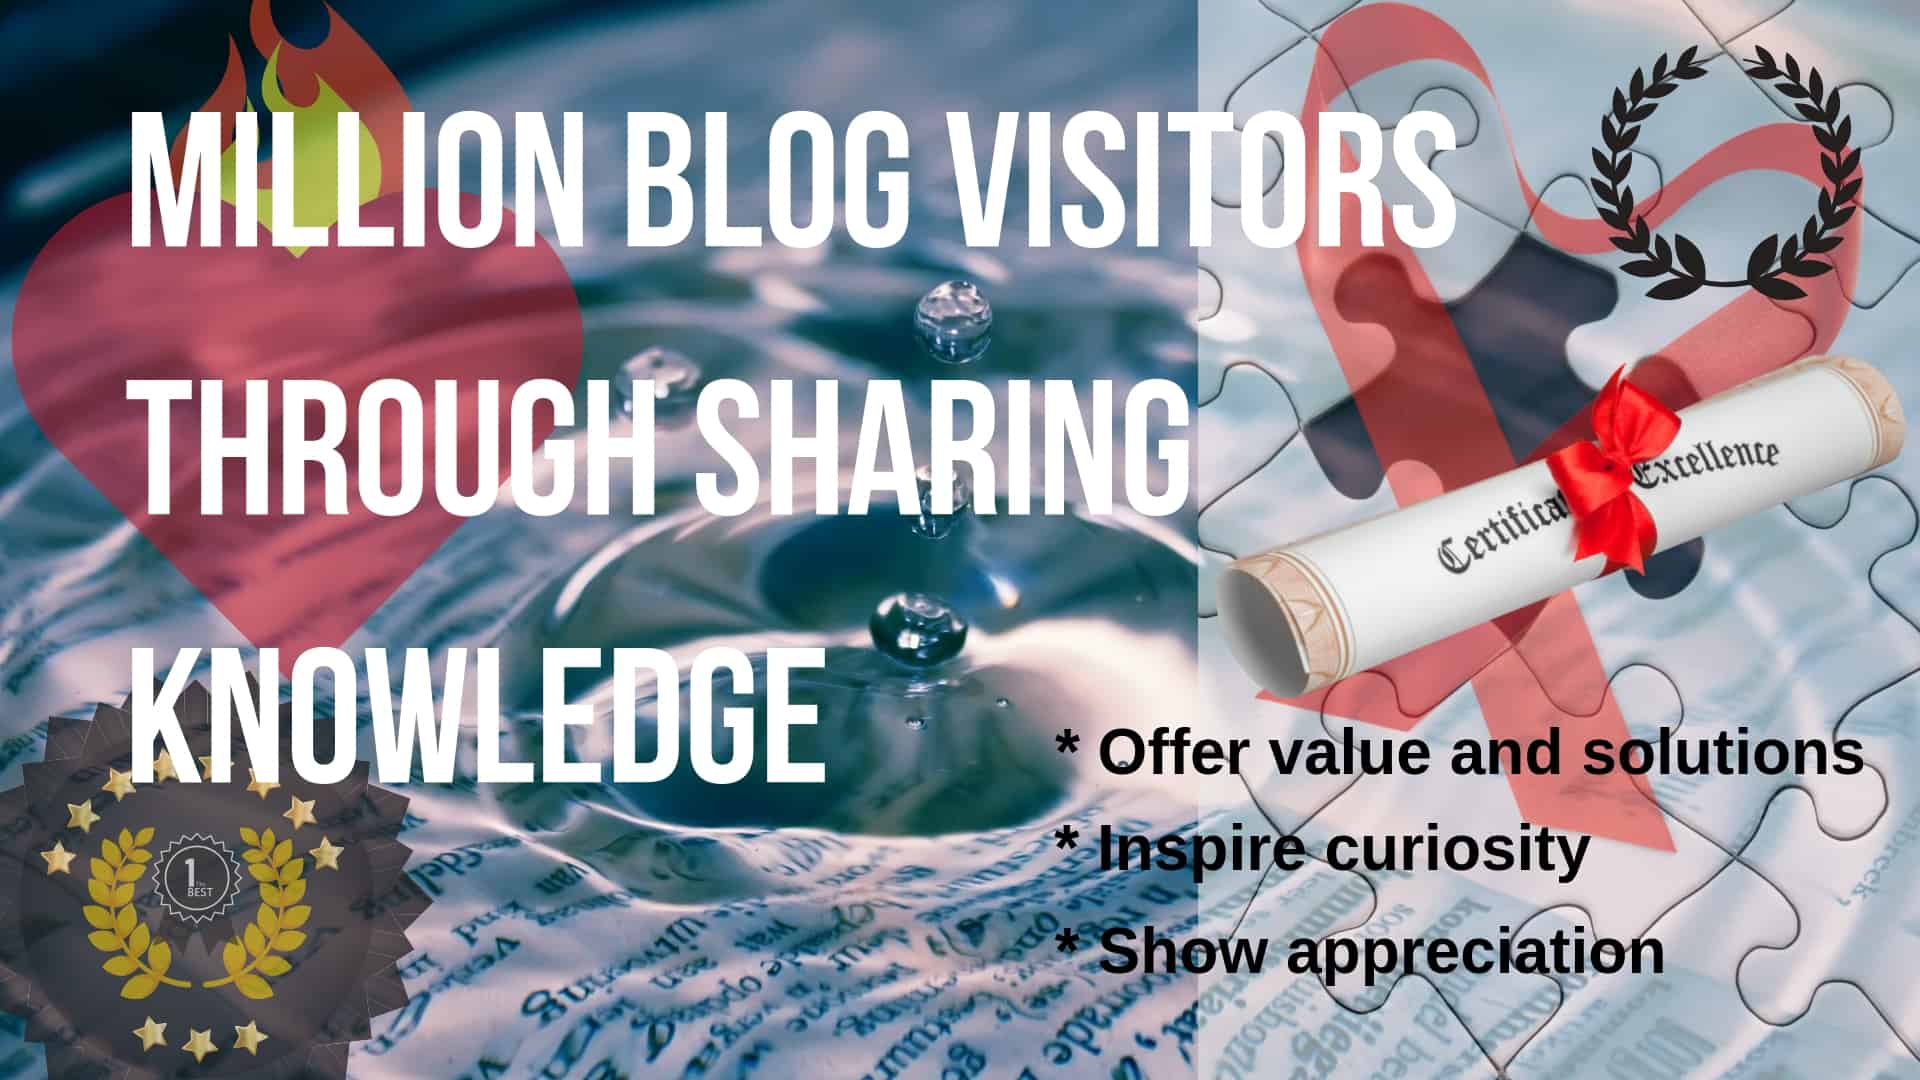 Million blog visitors through sharing knowledge